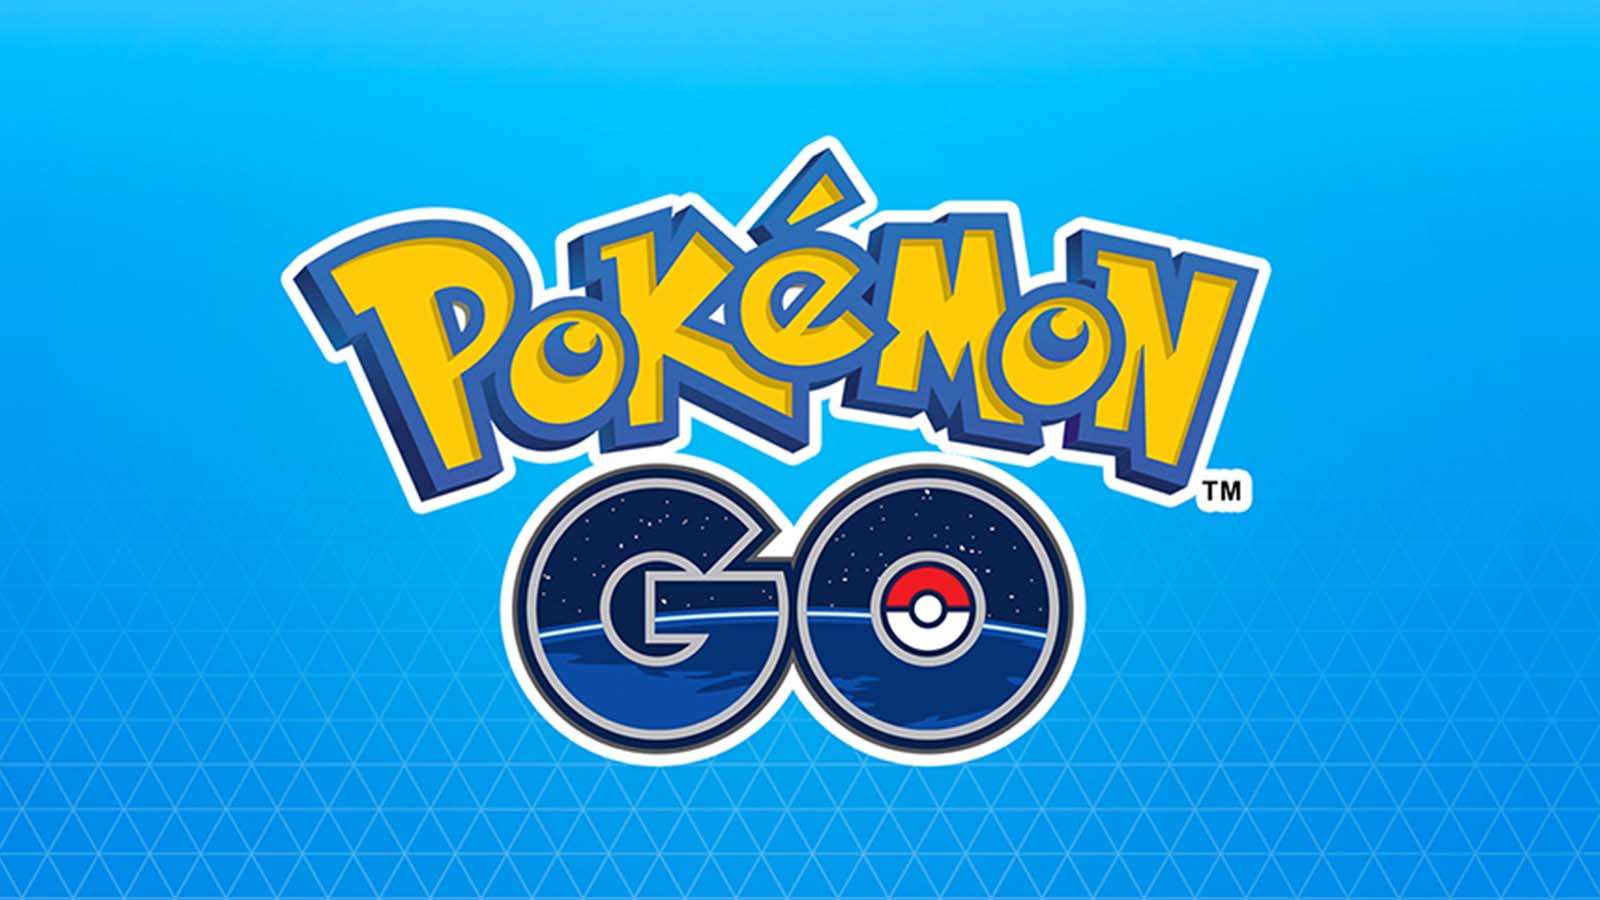 Pokemon Go logo blue background